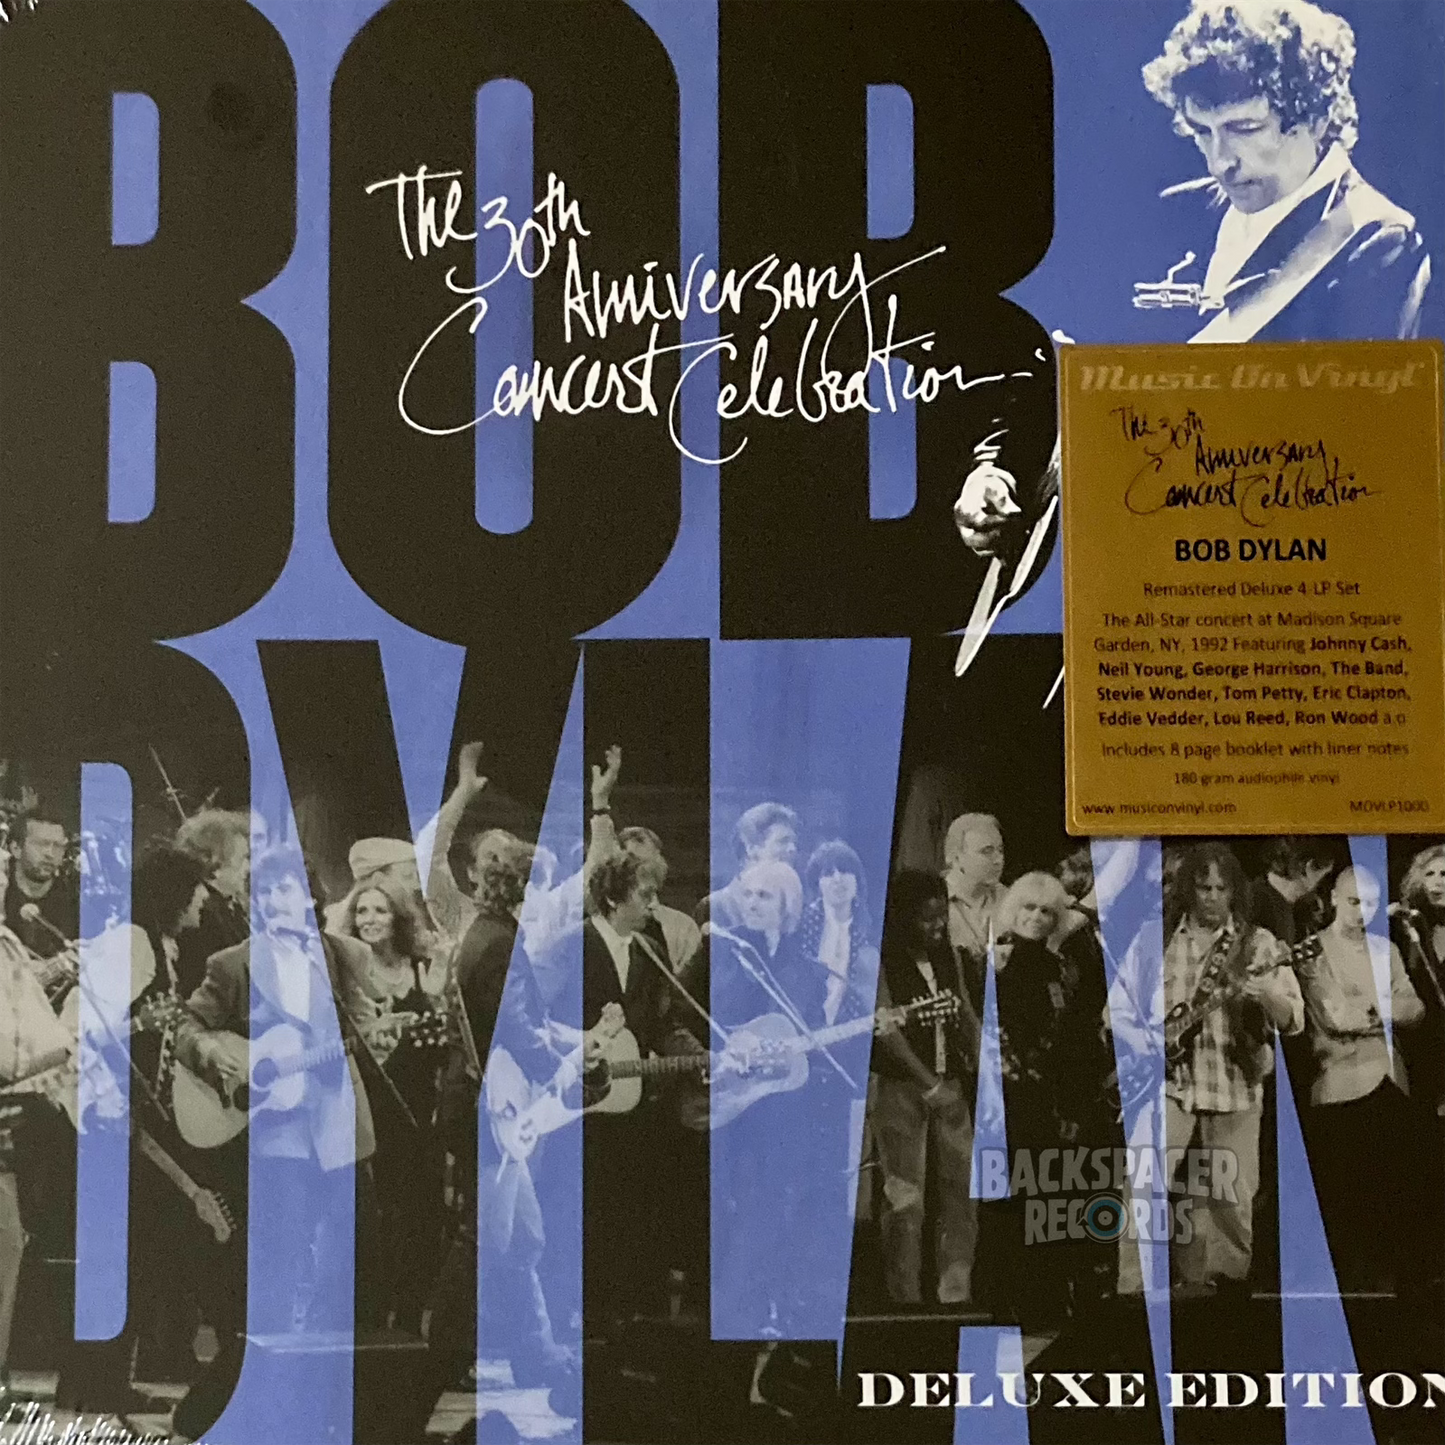 Bob Dylan – The 30th Anniversary Concert Celebration 4-LP Boxset (Sealed)